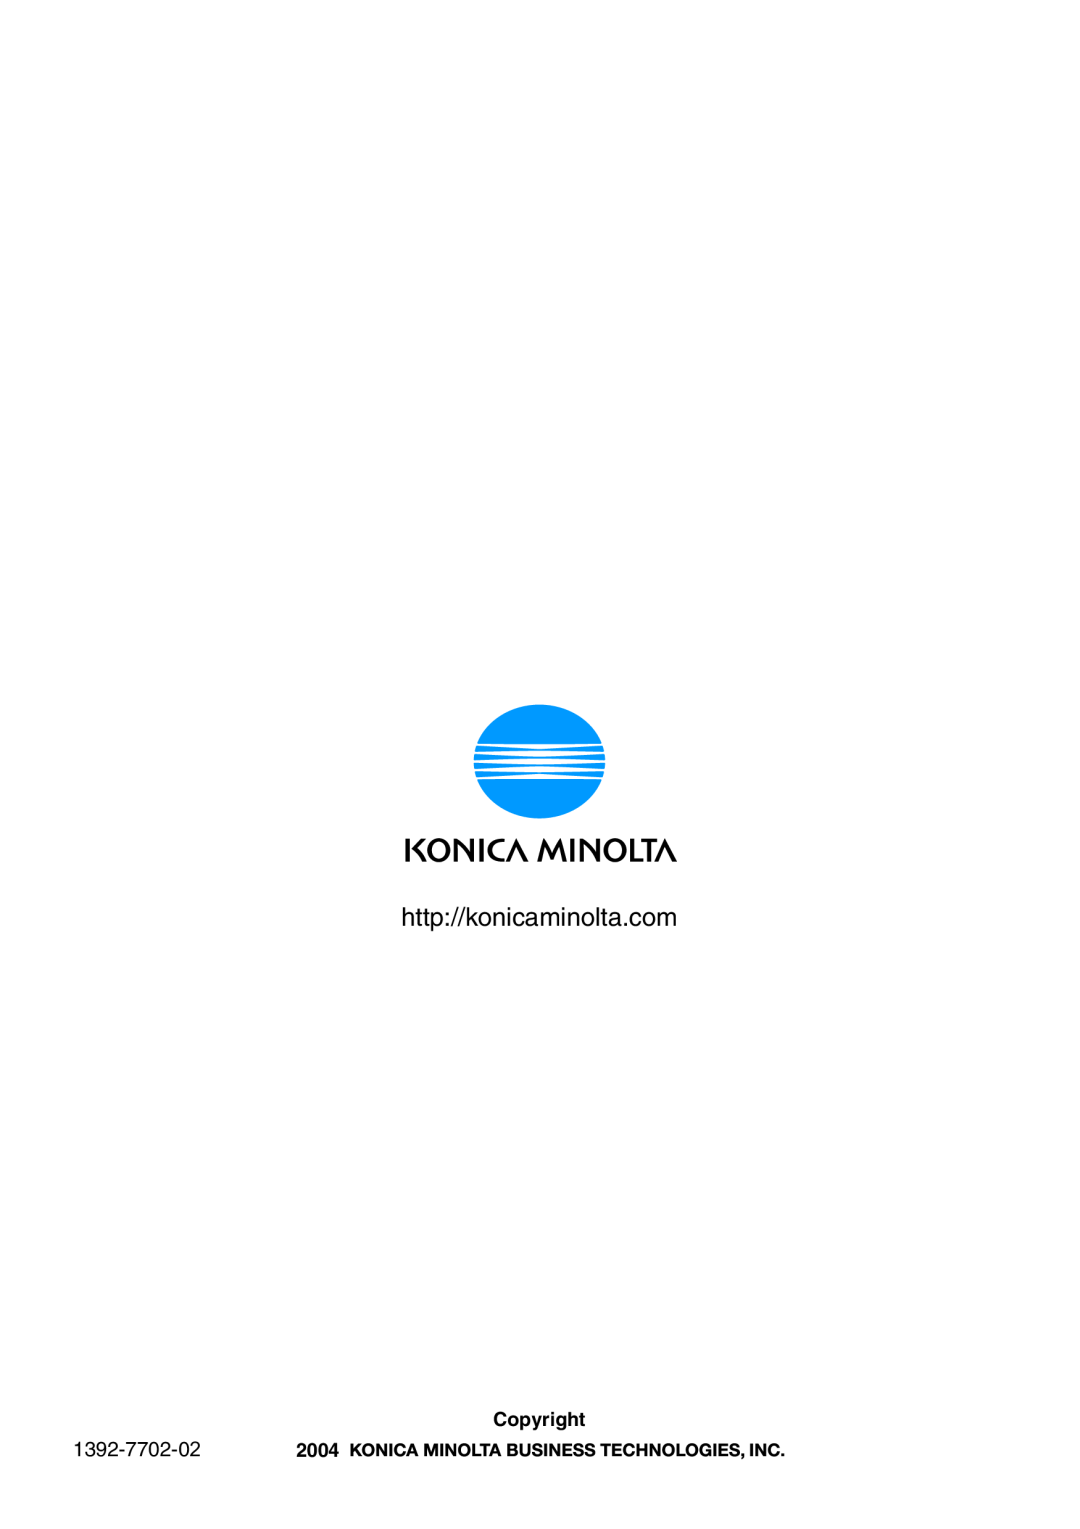 Konica Minolta FAX2900/FAX3900 manual http//konicaminolta.com, 1392-7702-02, Copyright 